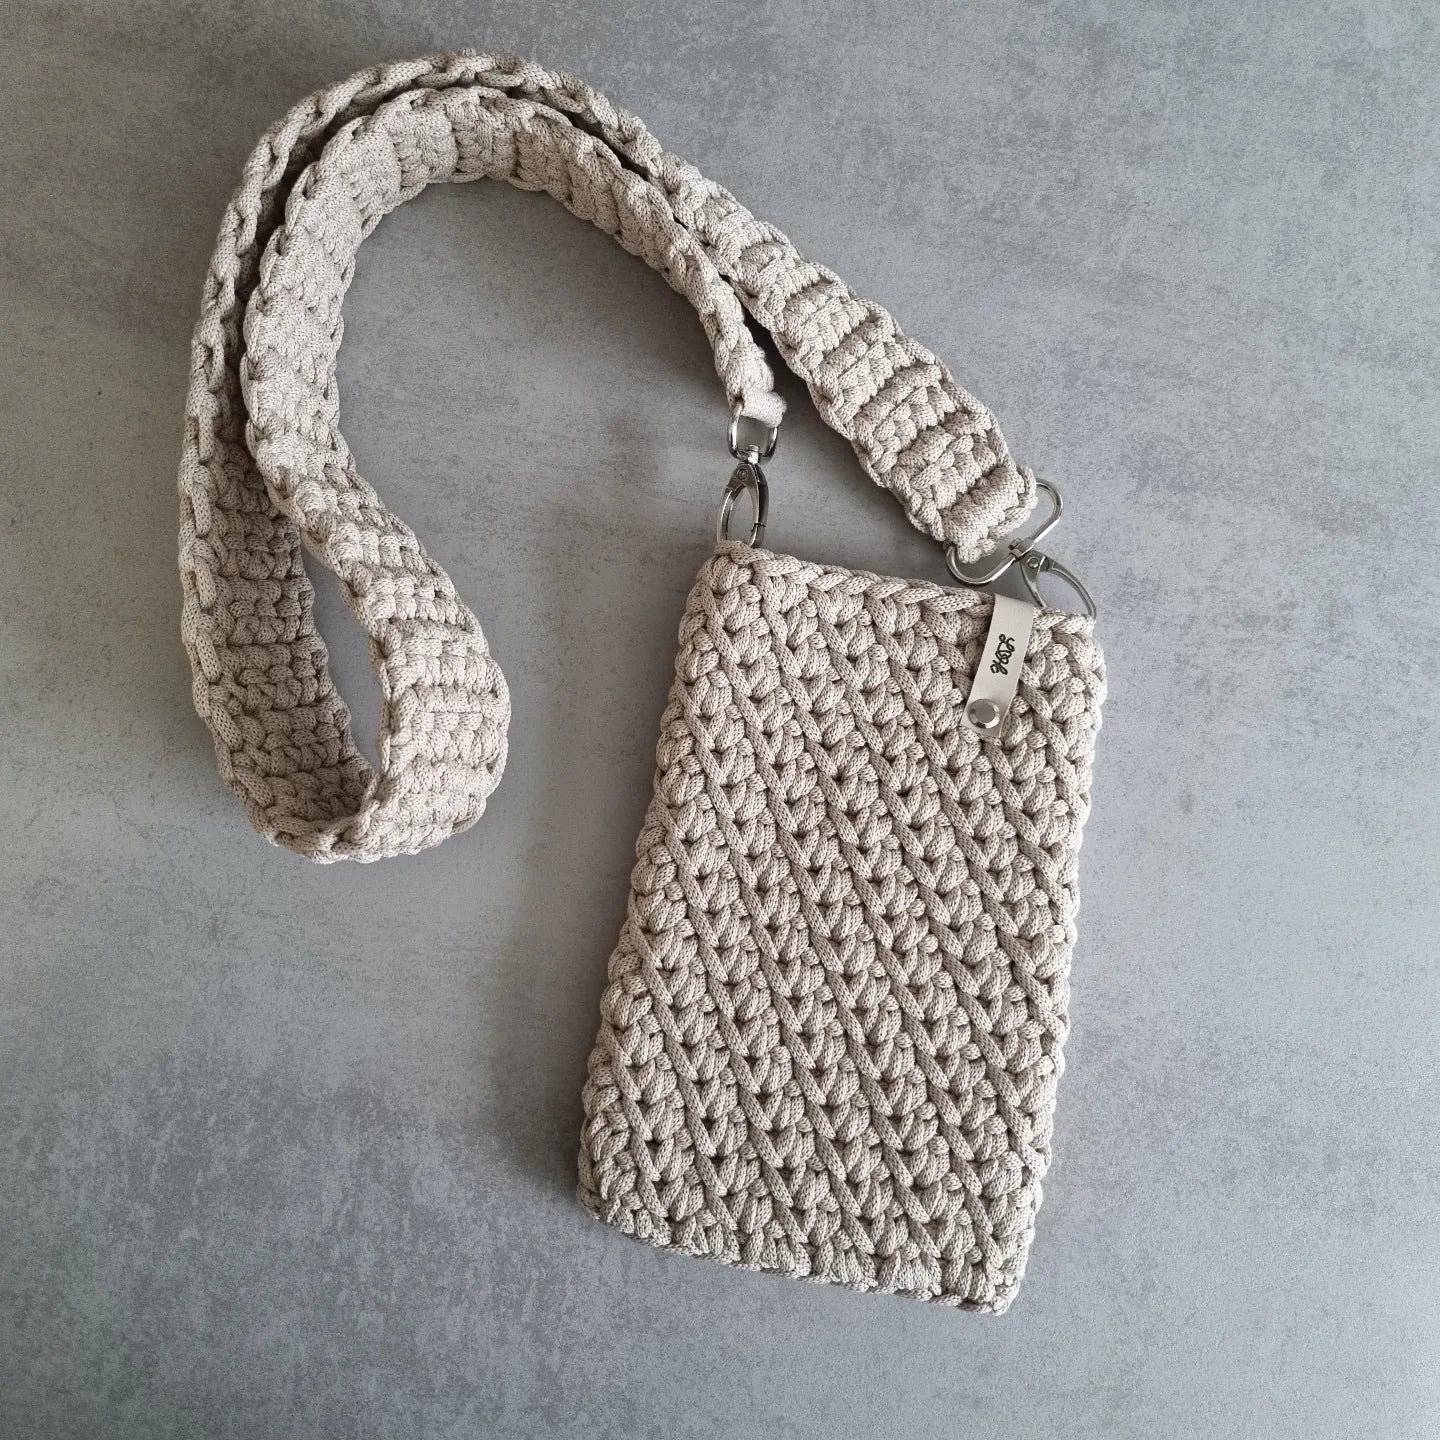 Crochet mini bag with adjustable strap